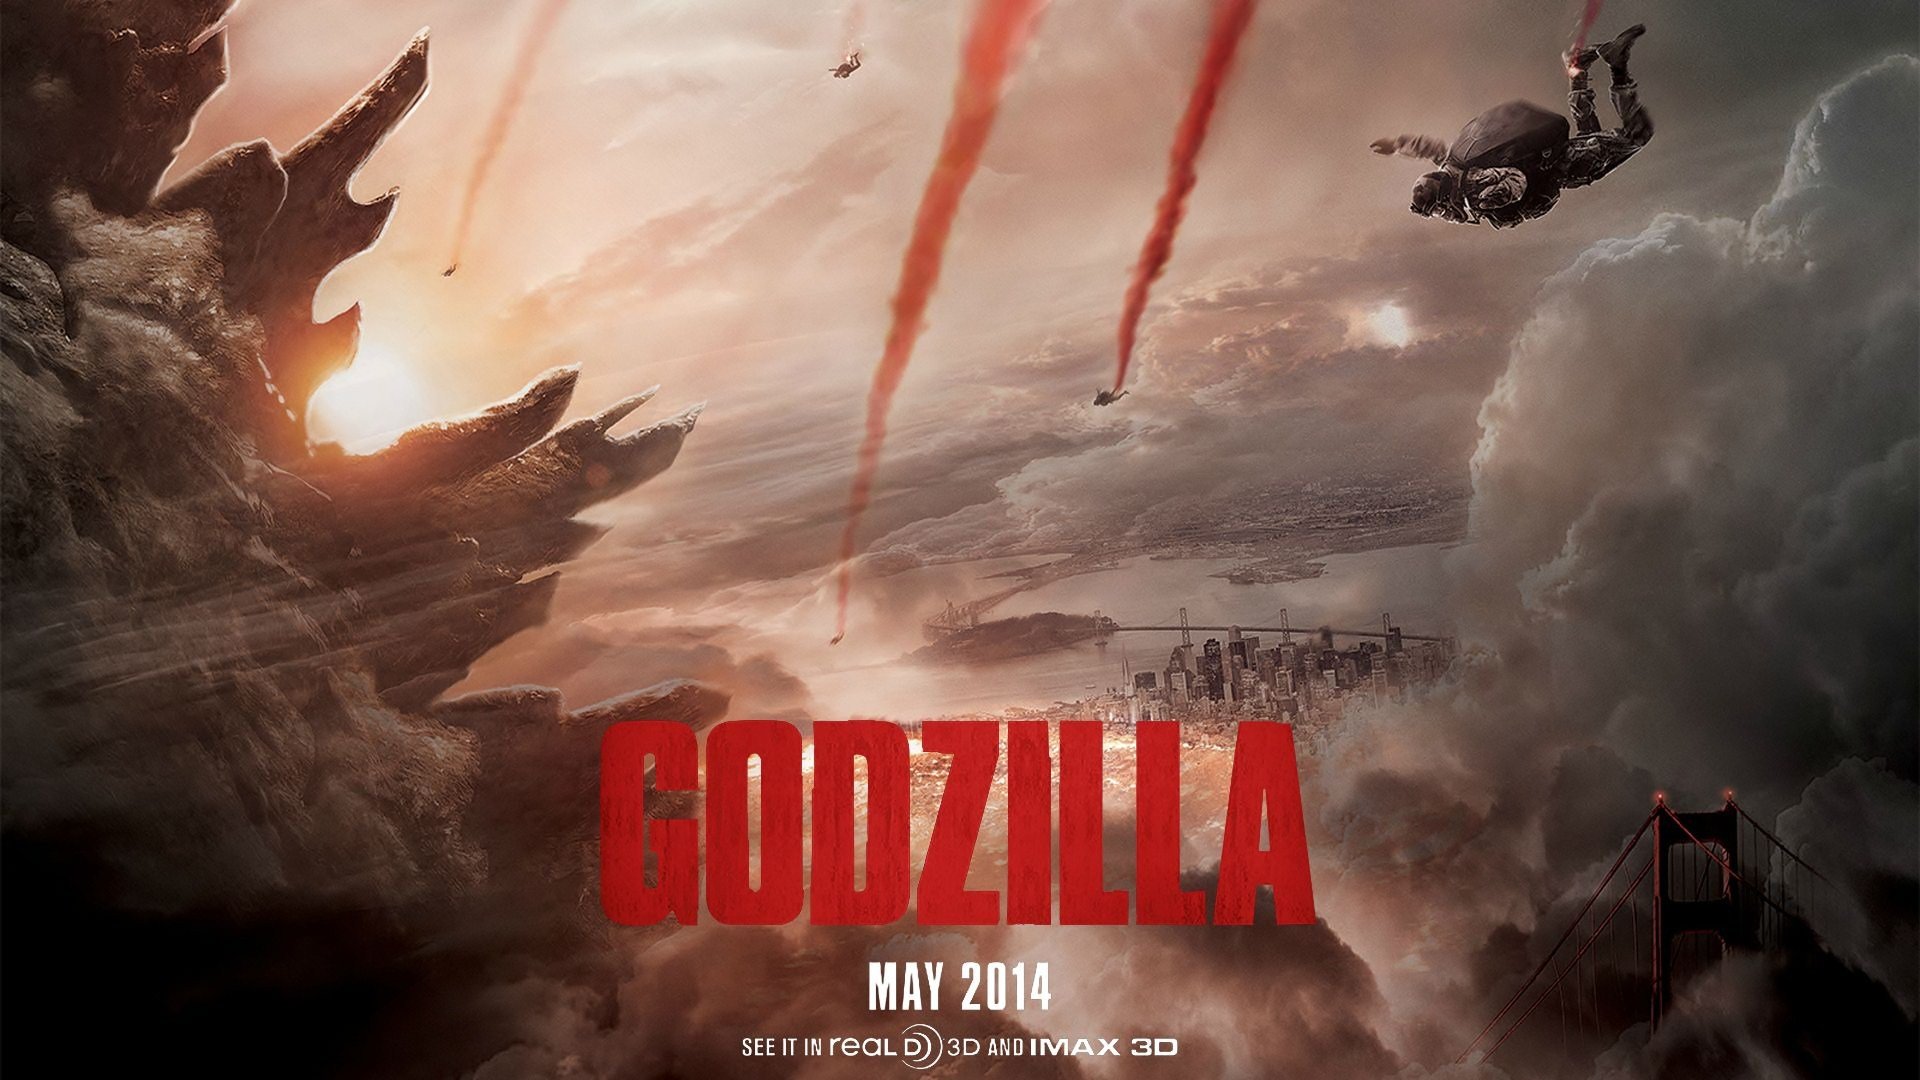 Download 1080p Godzilla (2014) PC background ID:315662 for free